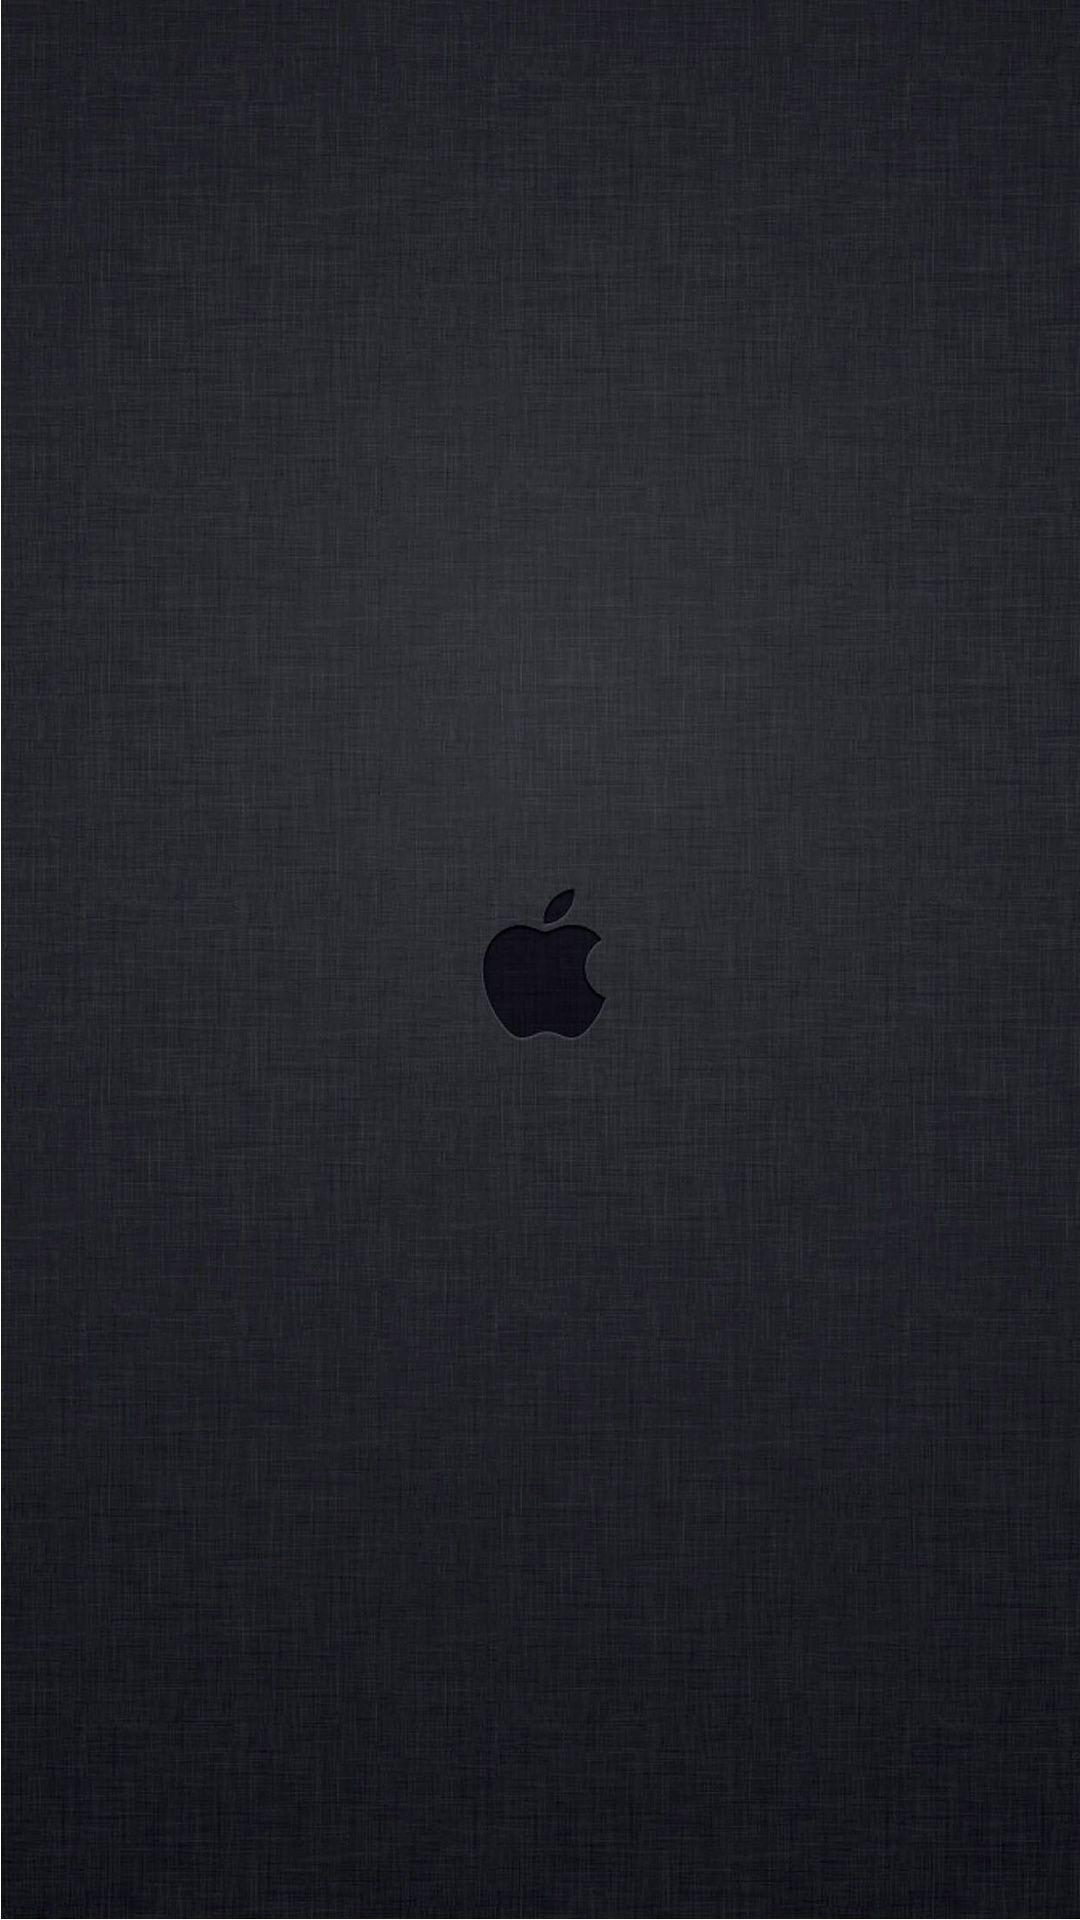 Grey Apple Logo - Best of Macintosh Apple Logo Wallpaper. Tap image for more